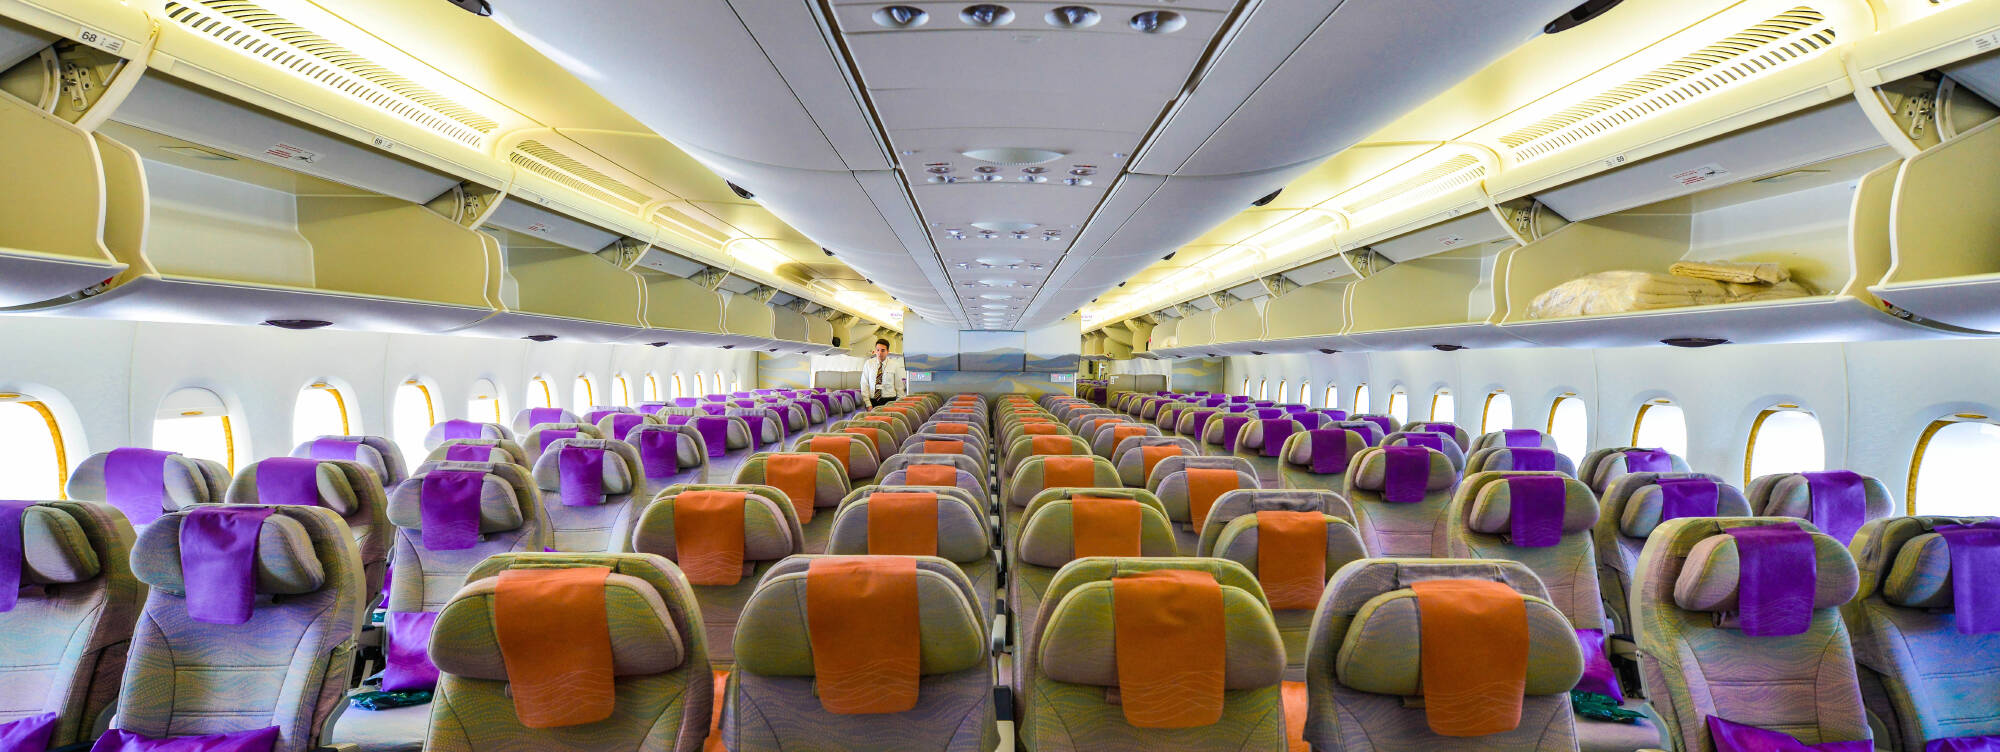 Flugzeugkabine Emirates Airlines Economy Klasse